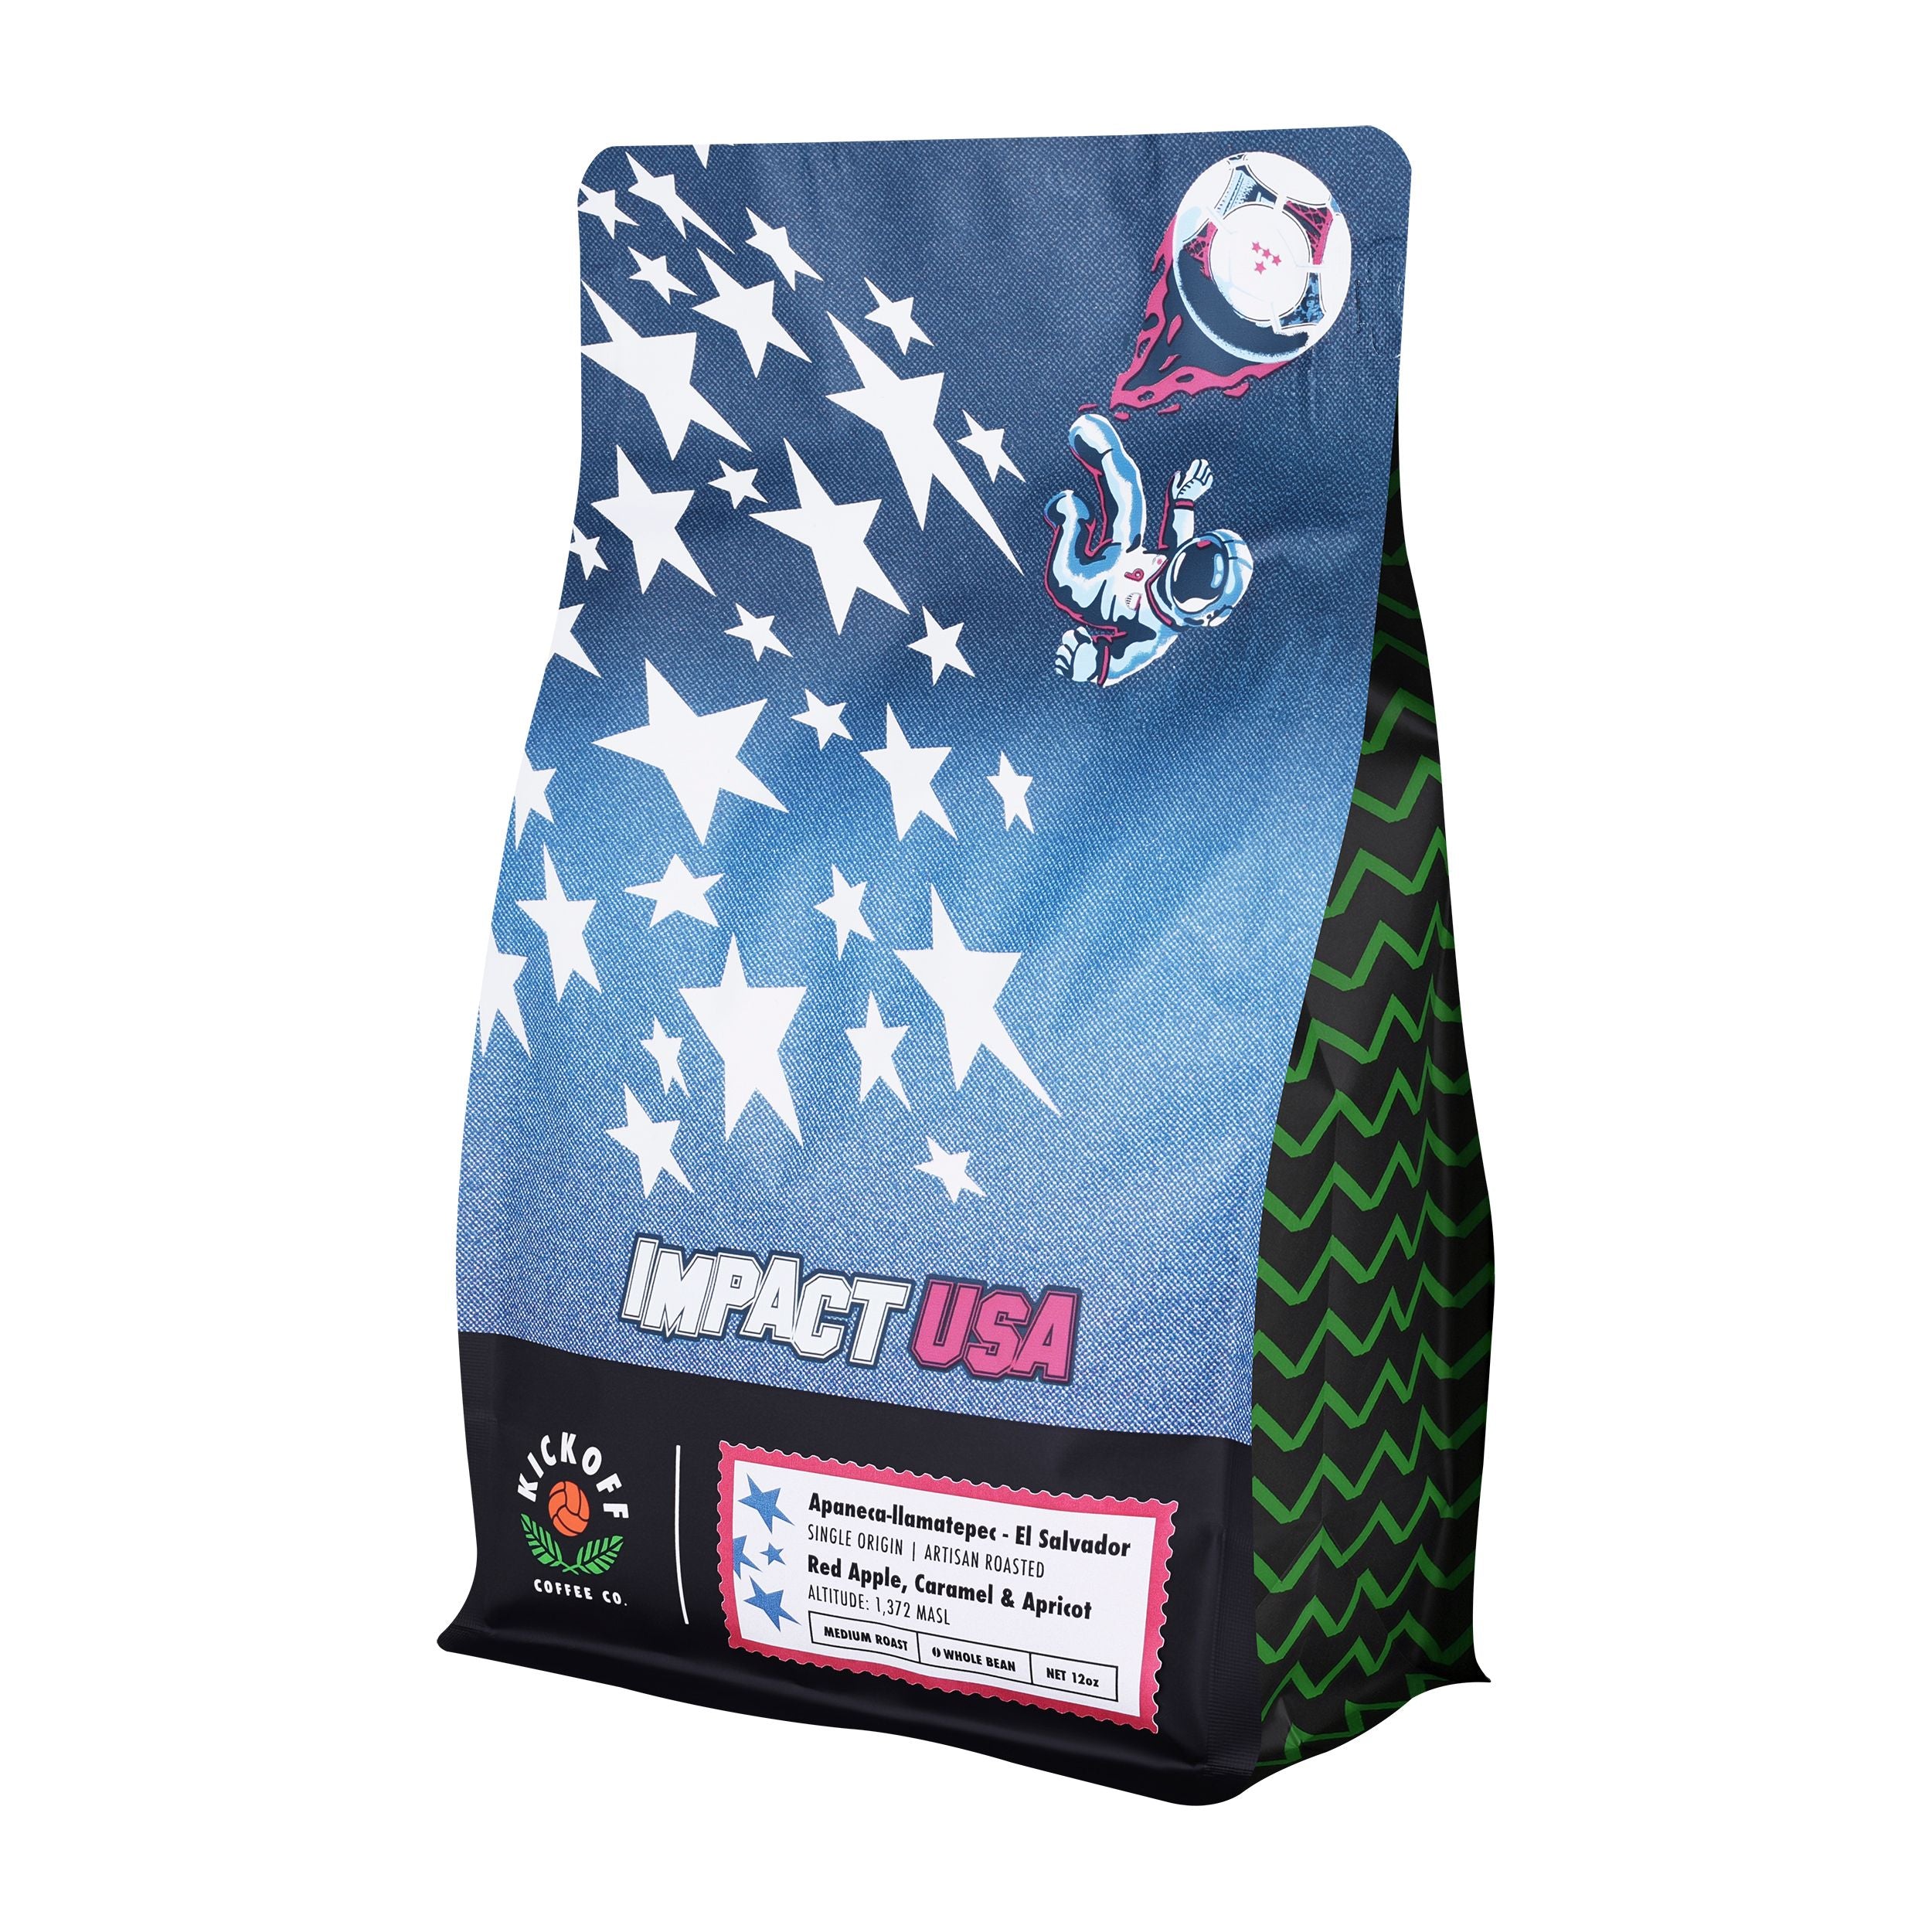 Impact Light Kit Bag #3 - Holds 2 Monolights with Light WB1119